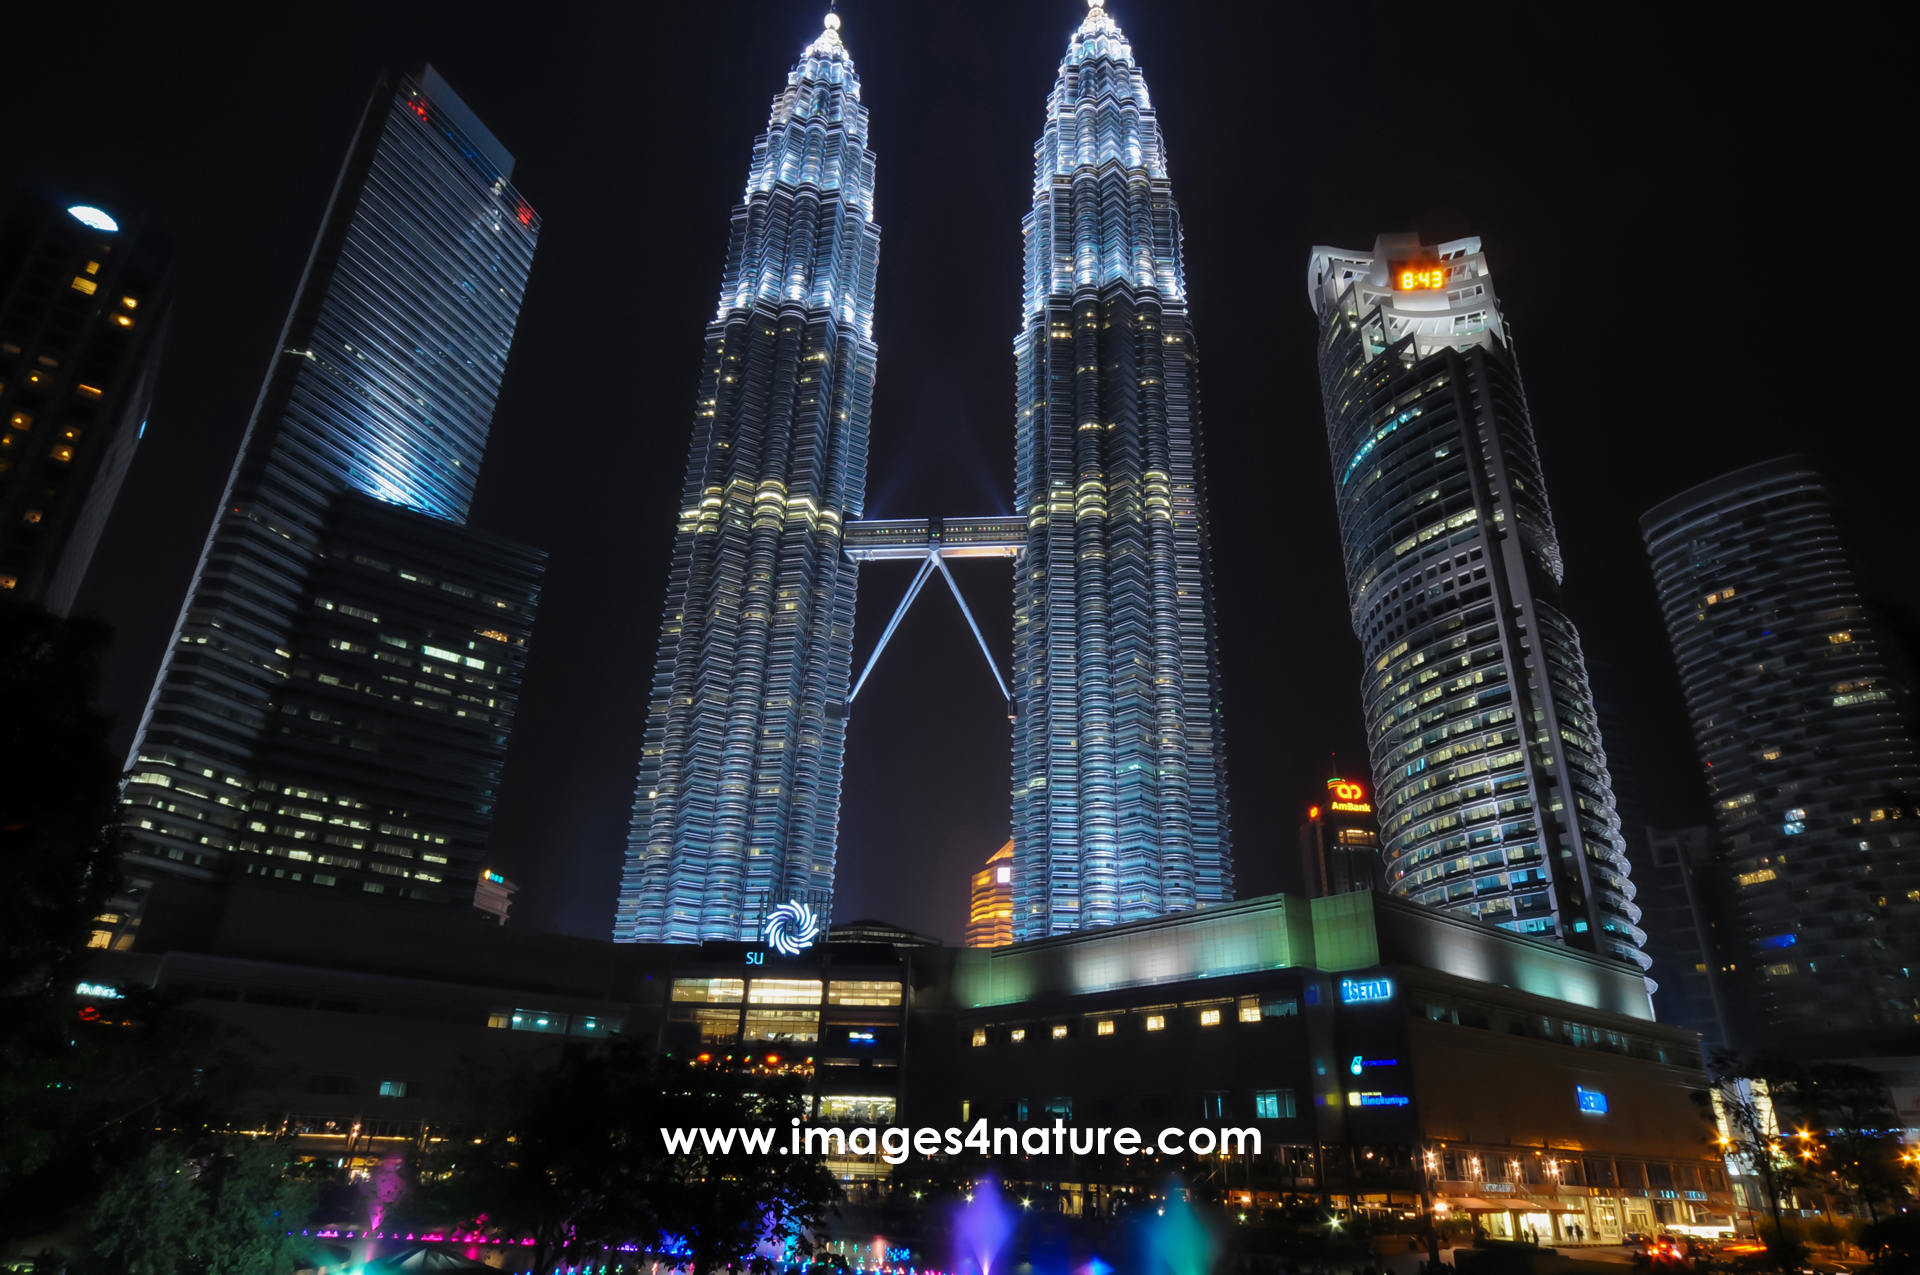 Kuala Lumpur city centre with Petronas Twin Towers at night